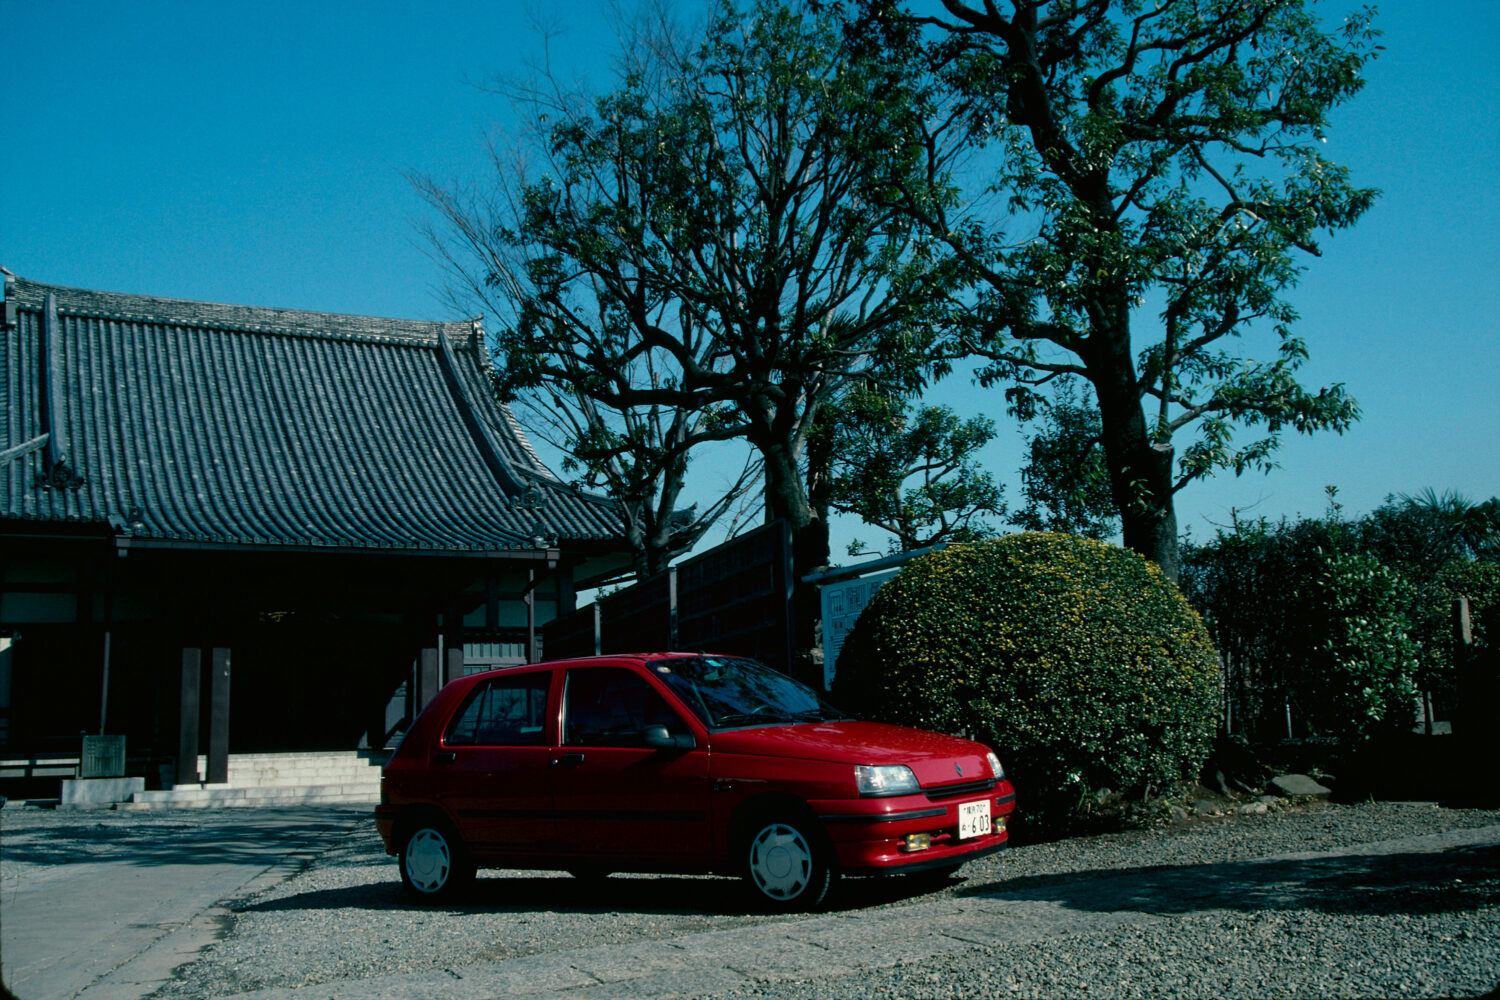 2020 - 30 ans de Renault CLIO - Renault CLIO (1990-1999)